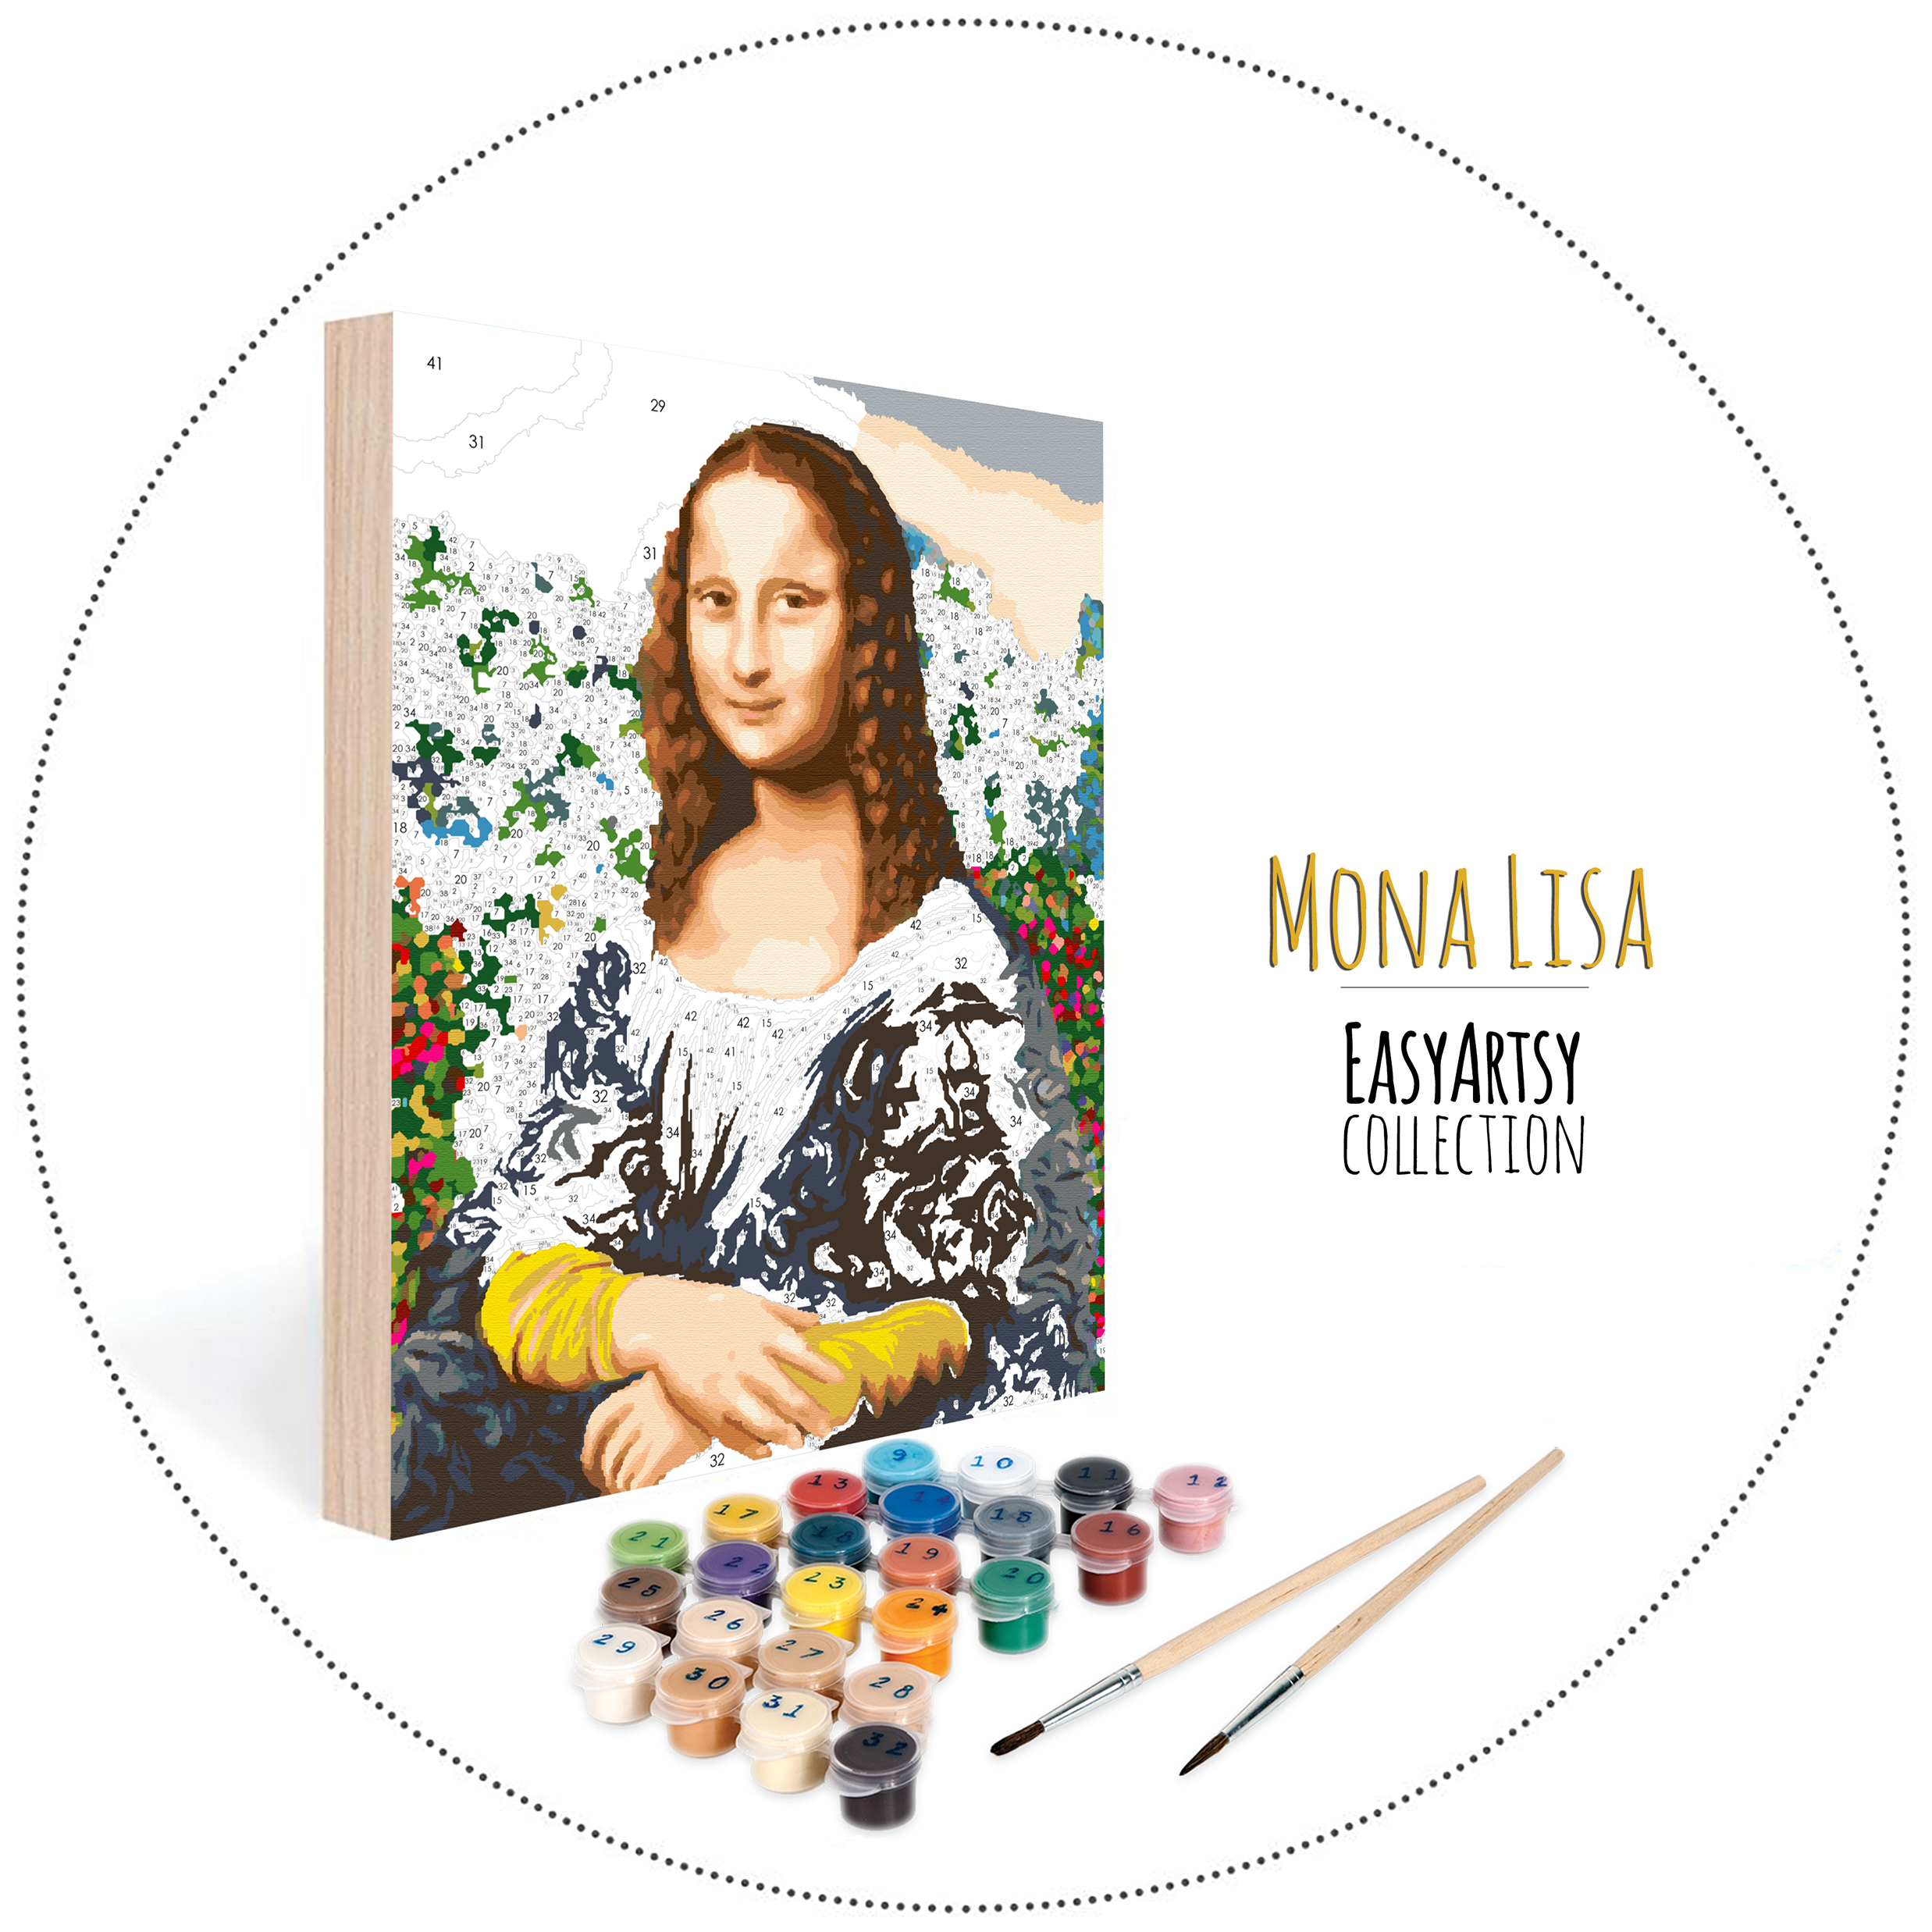 Drawing Materials – Mona Lisa Artists' Materials